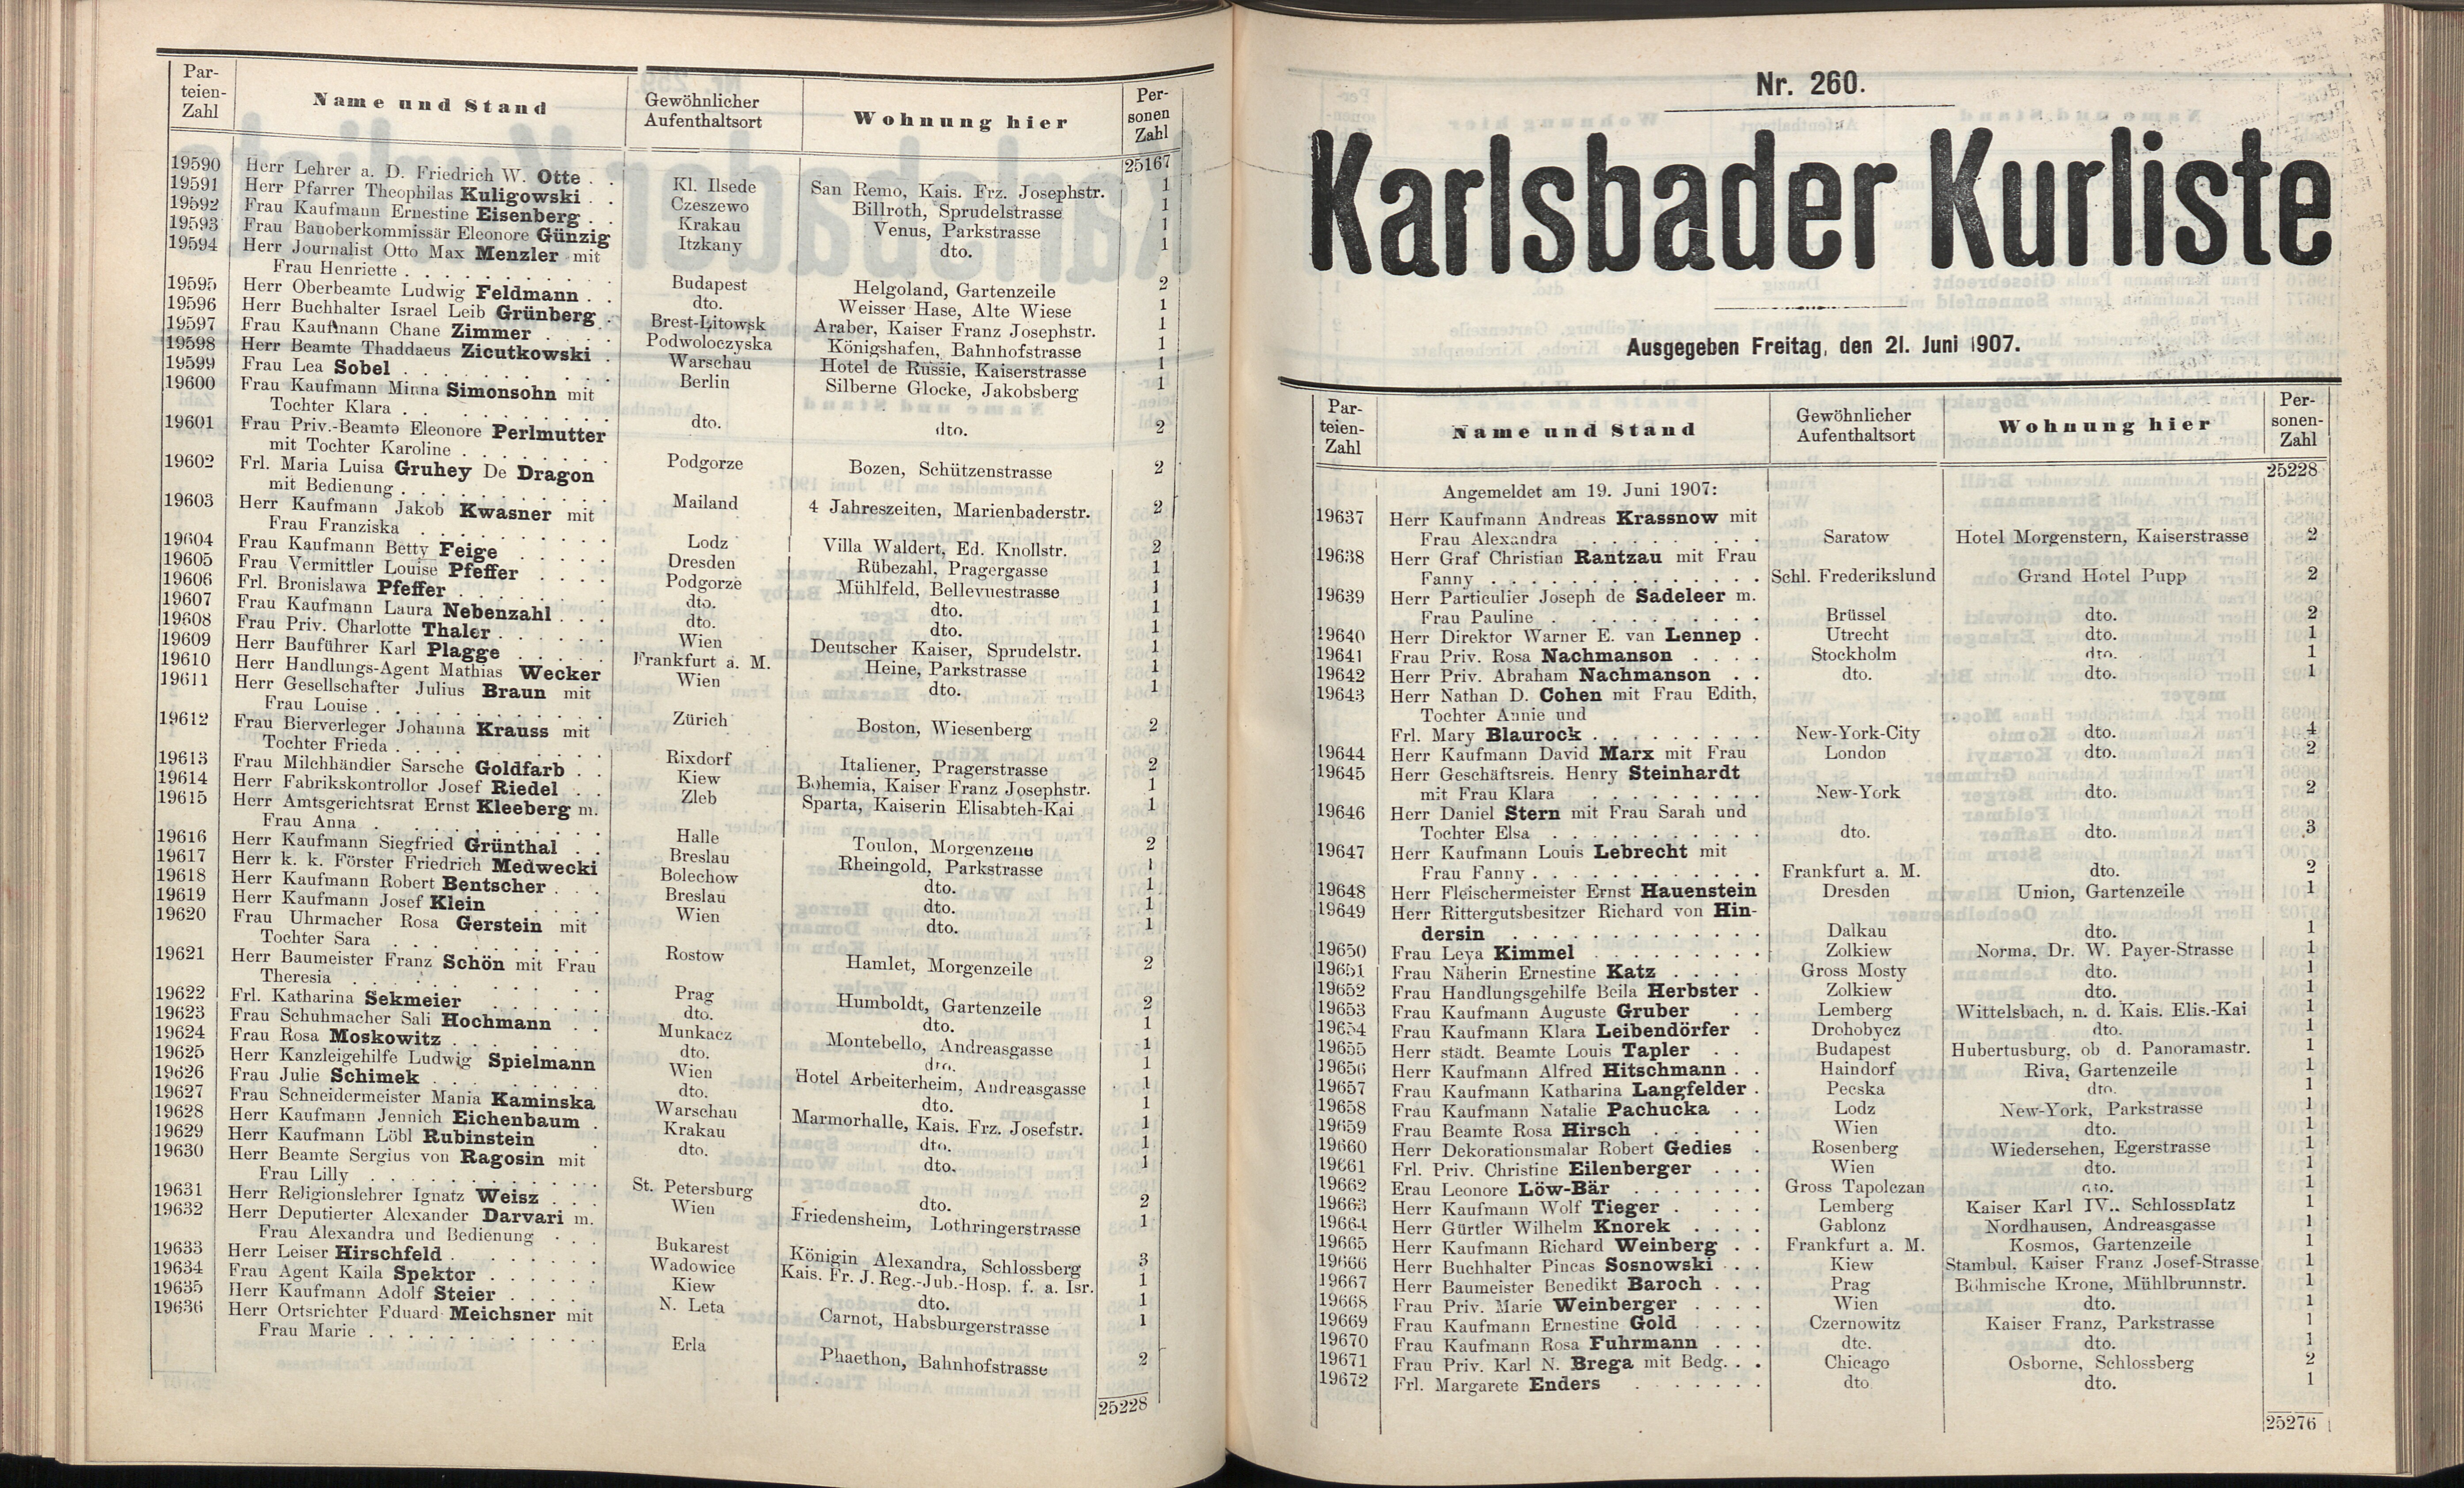 373. soap-kv_knihovna_karlsbader-kurliste-1907_3740